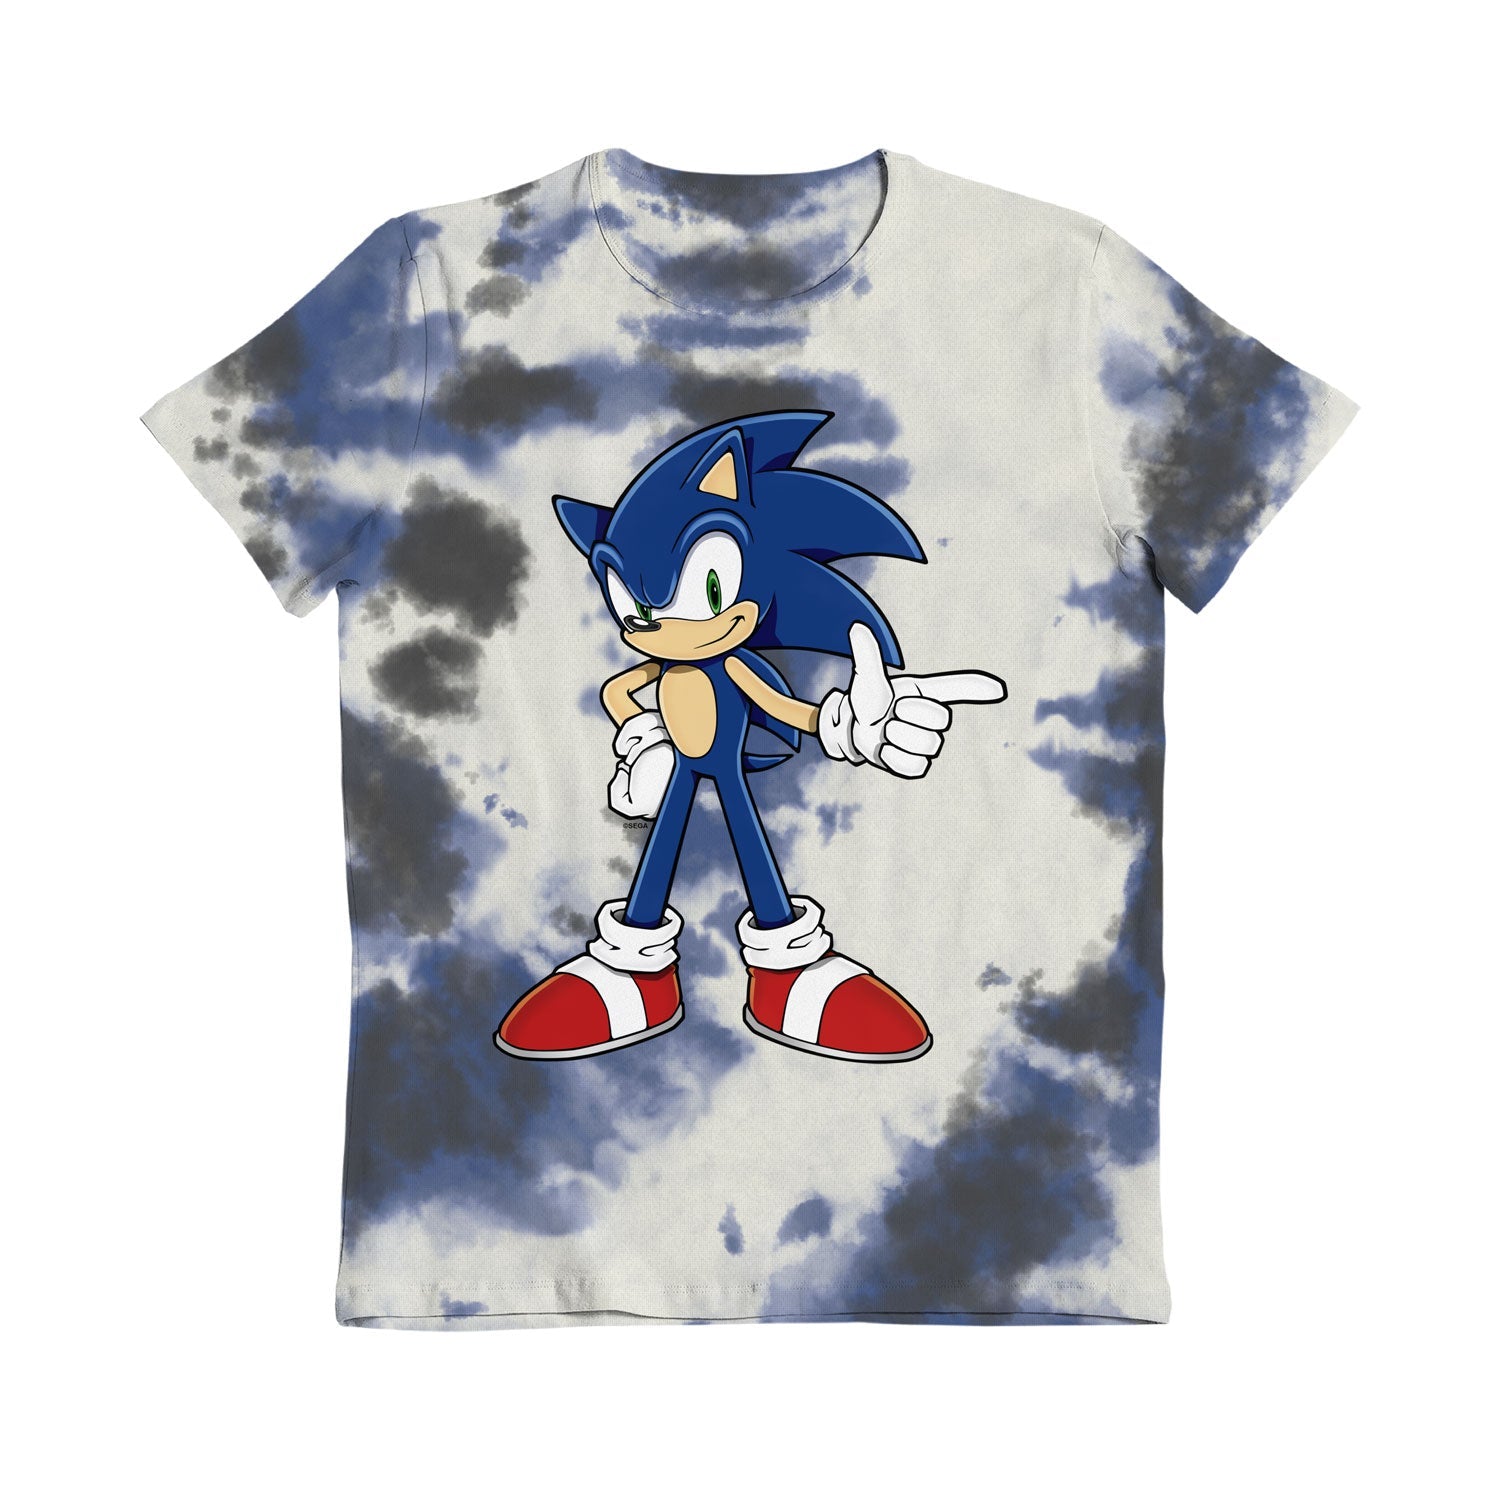 Sonic The Hedgehog Tie Dye Grey, Blue & White Kids T-Shirt